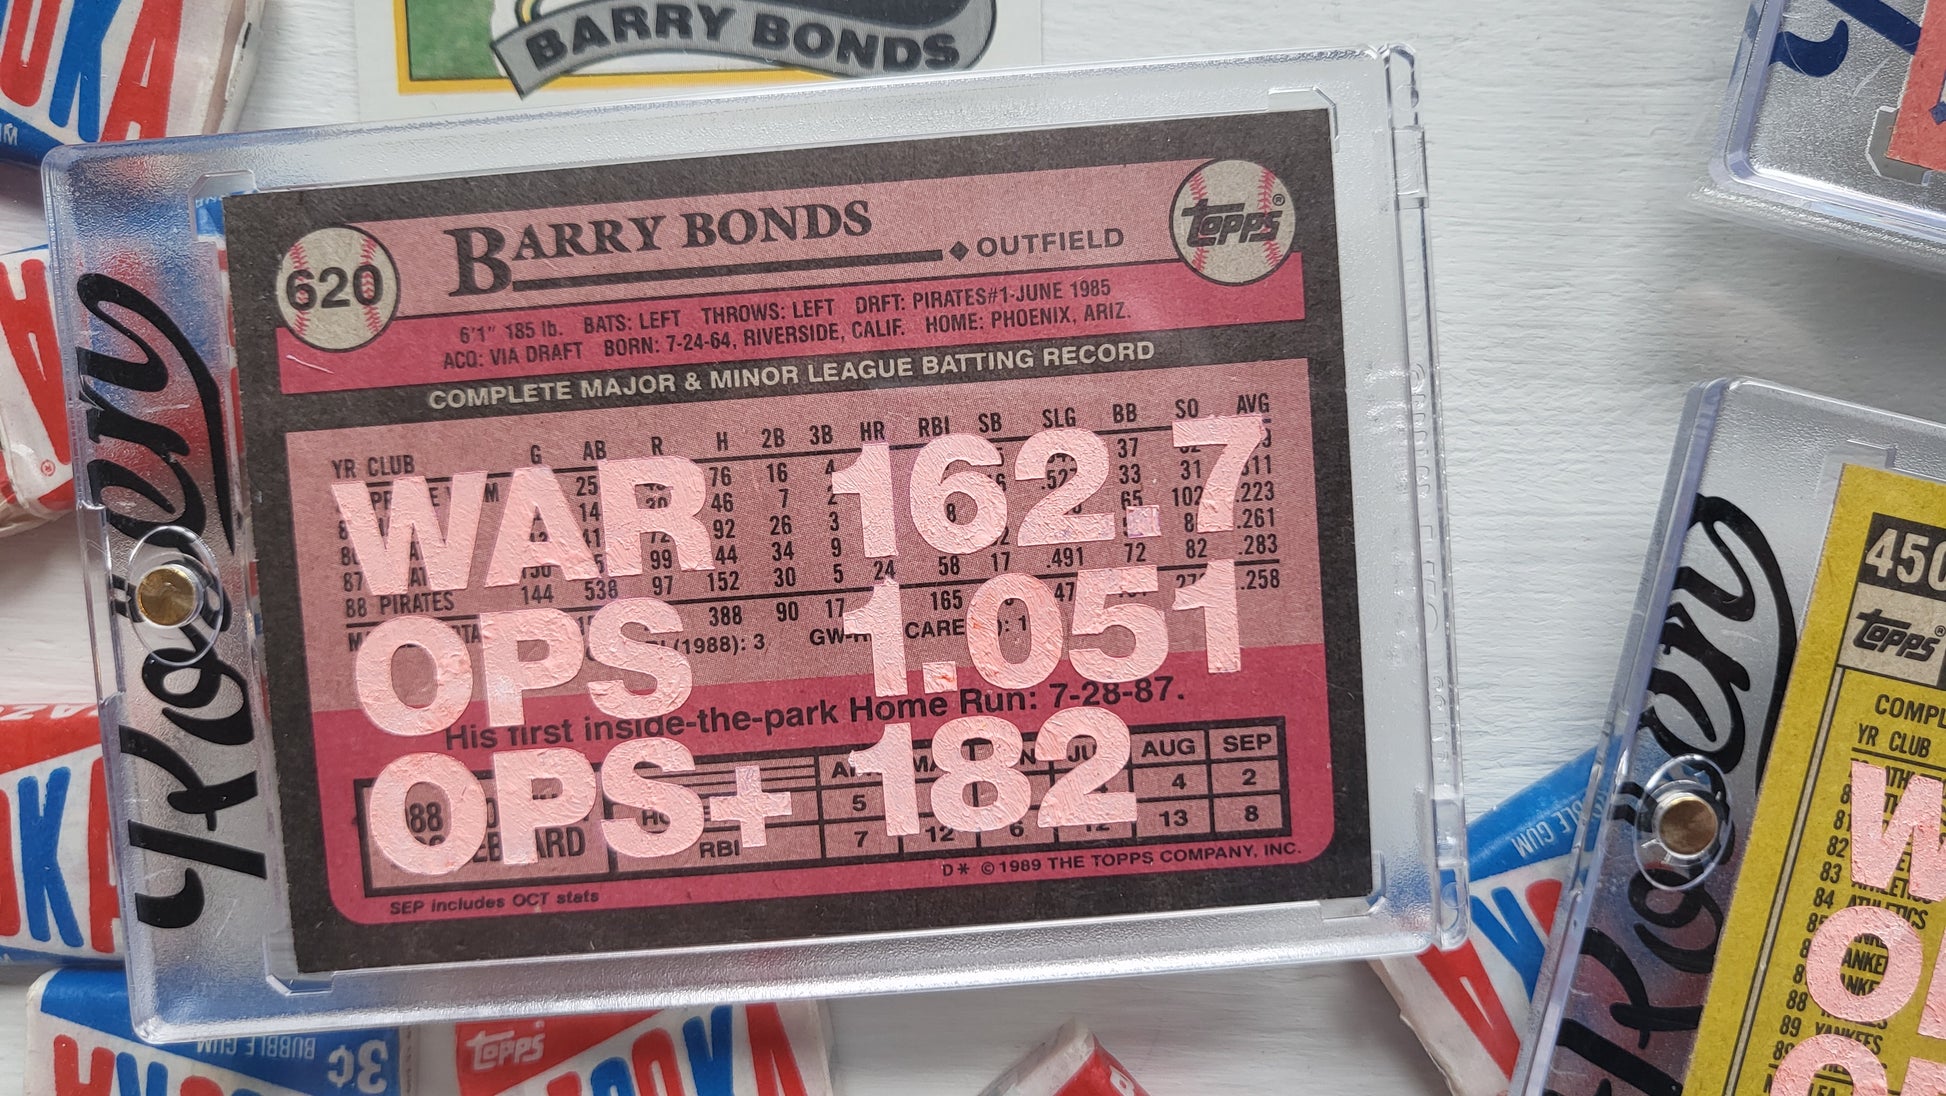 Matthew Lee Rosen 1989 Topps Barry Bonds gum